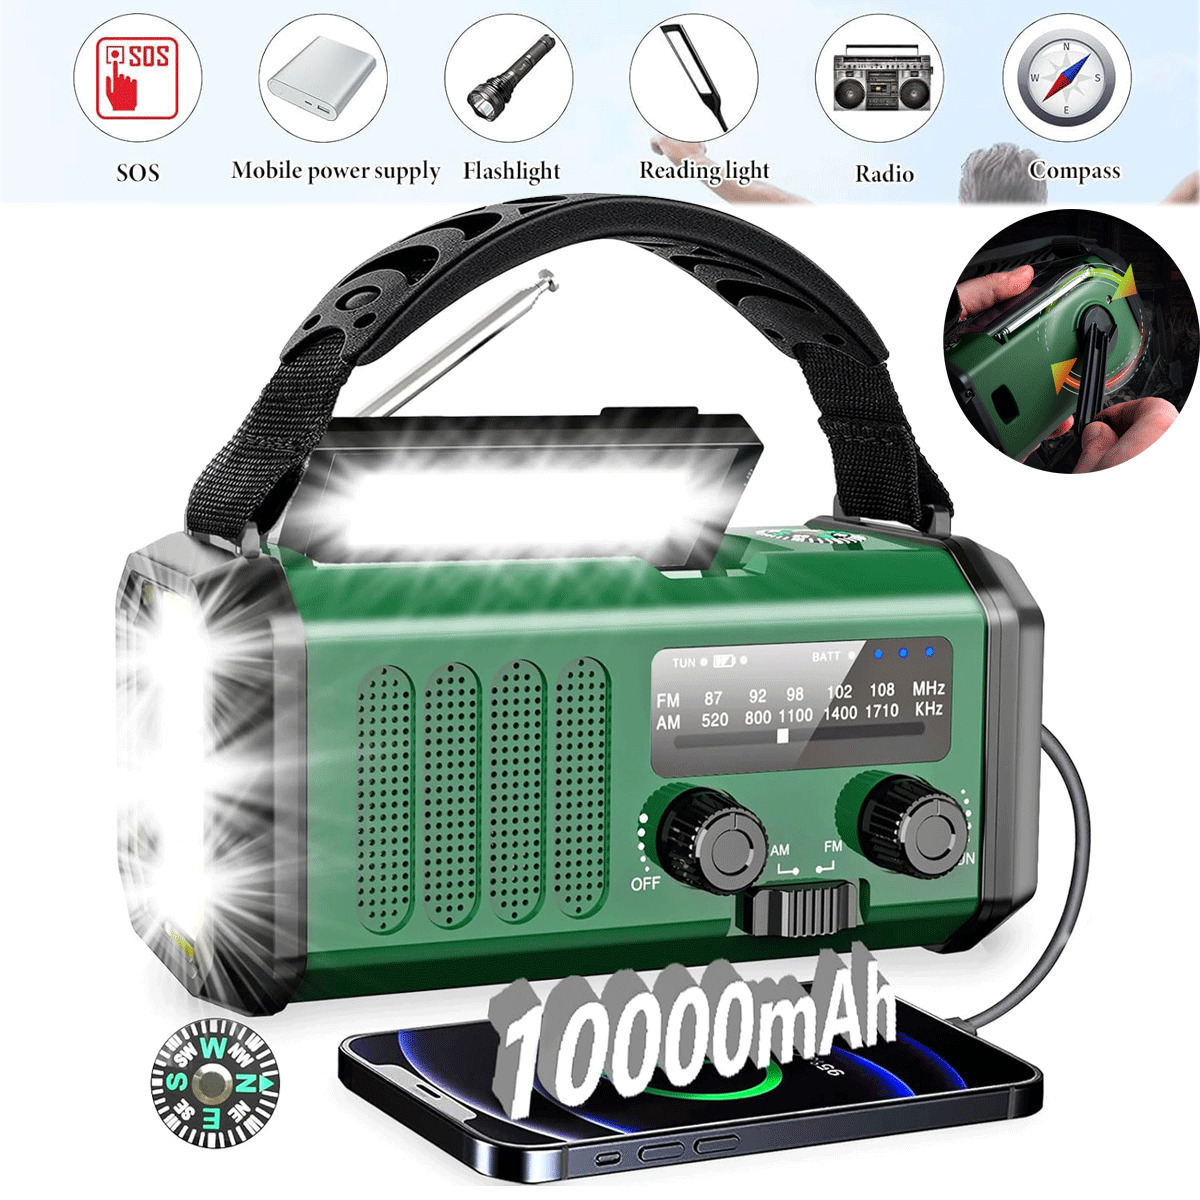 10000mAh Hand Crank Emergency Solar Weather Radio Power Bank Charger Flash Light